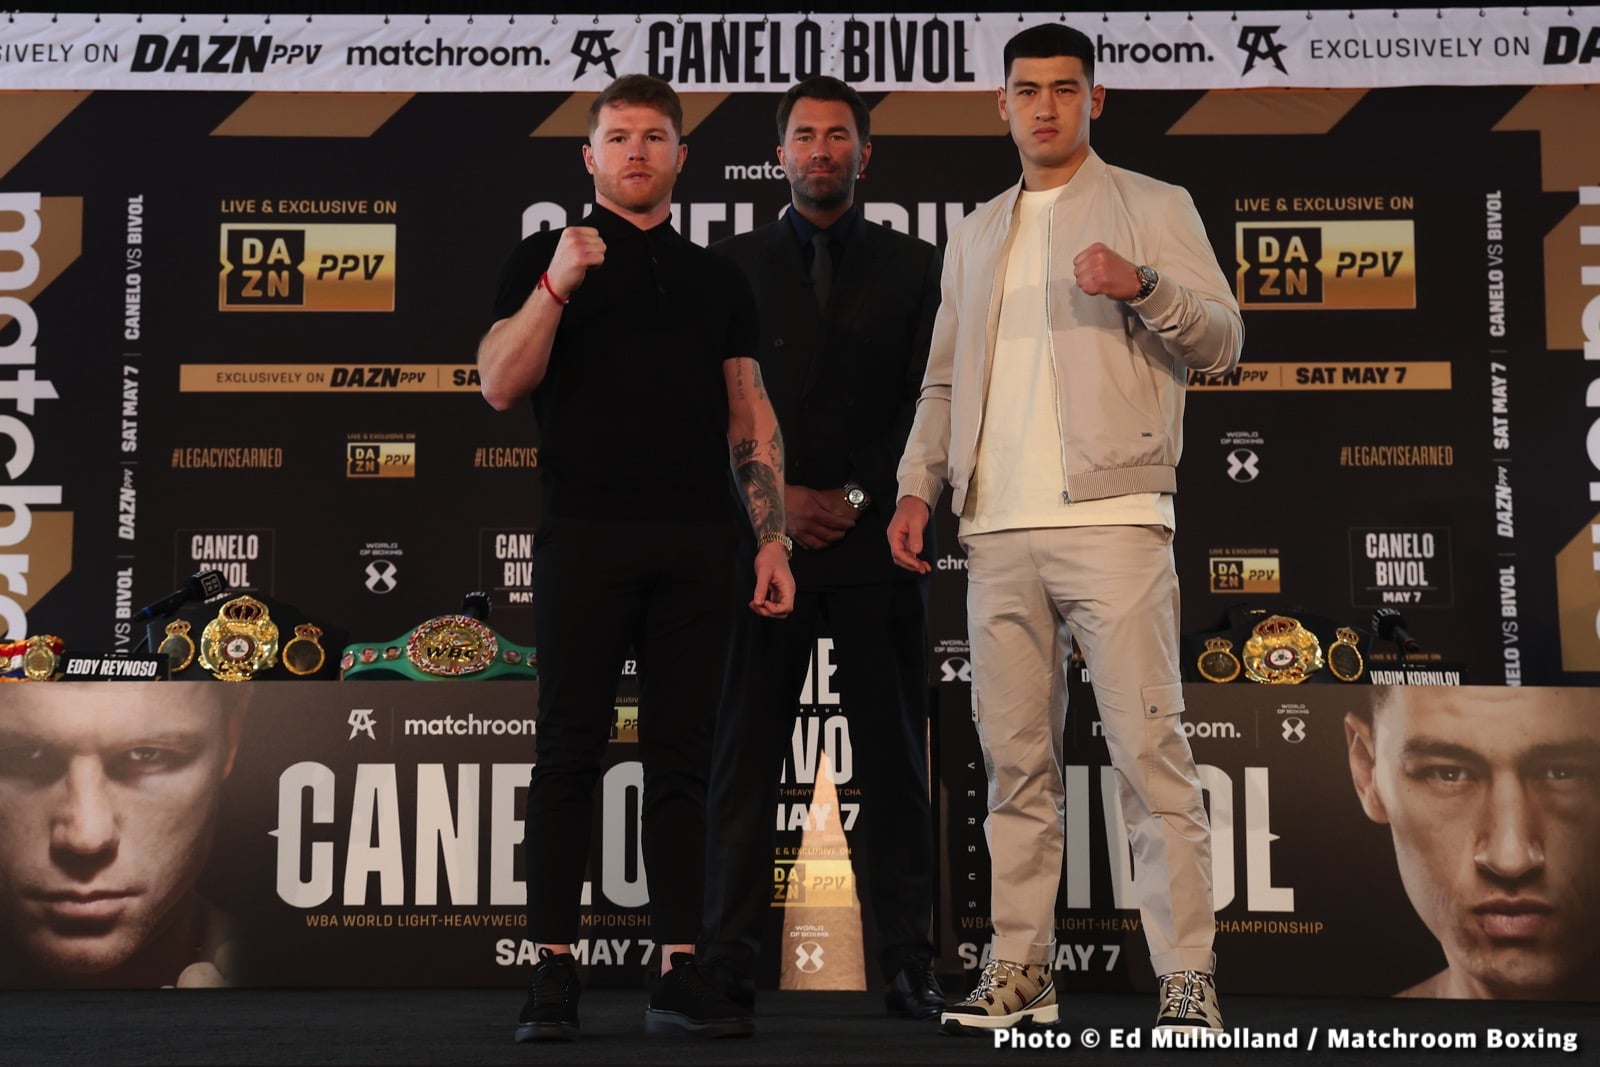 Canelo Alvarez, Dmitry Bivol, Timothy Bradley boxing photo and news image